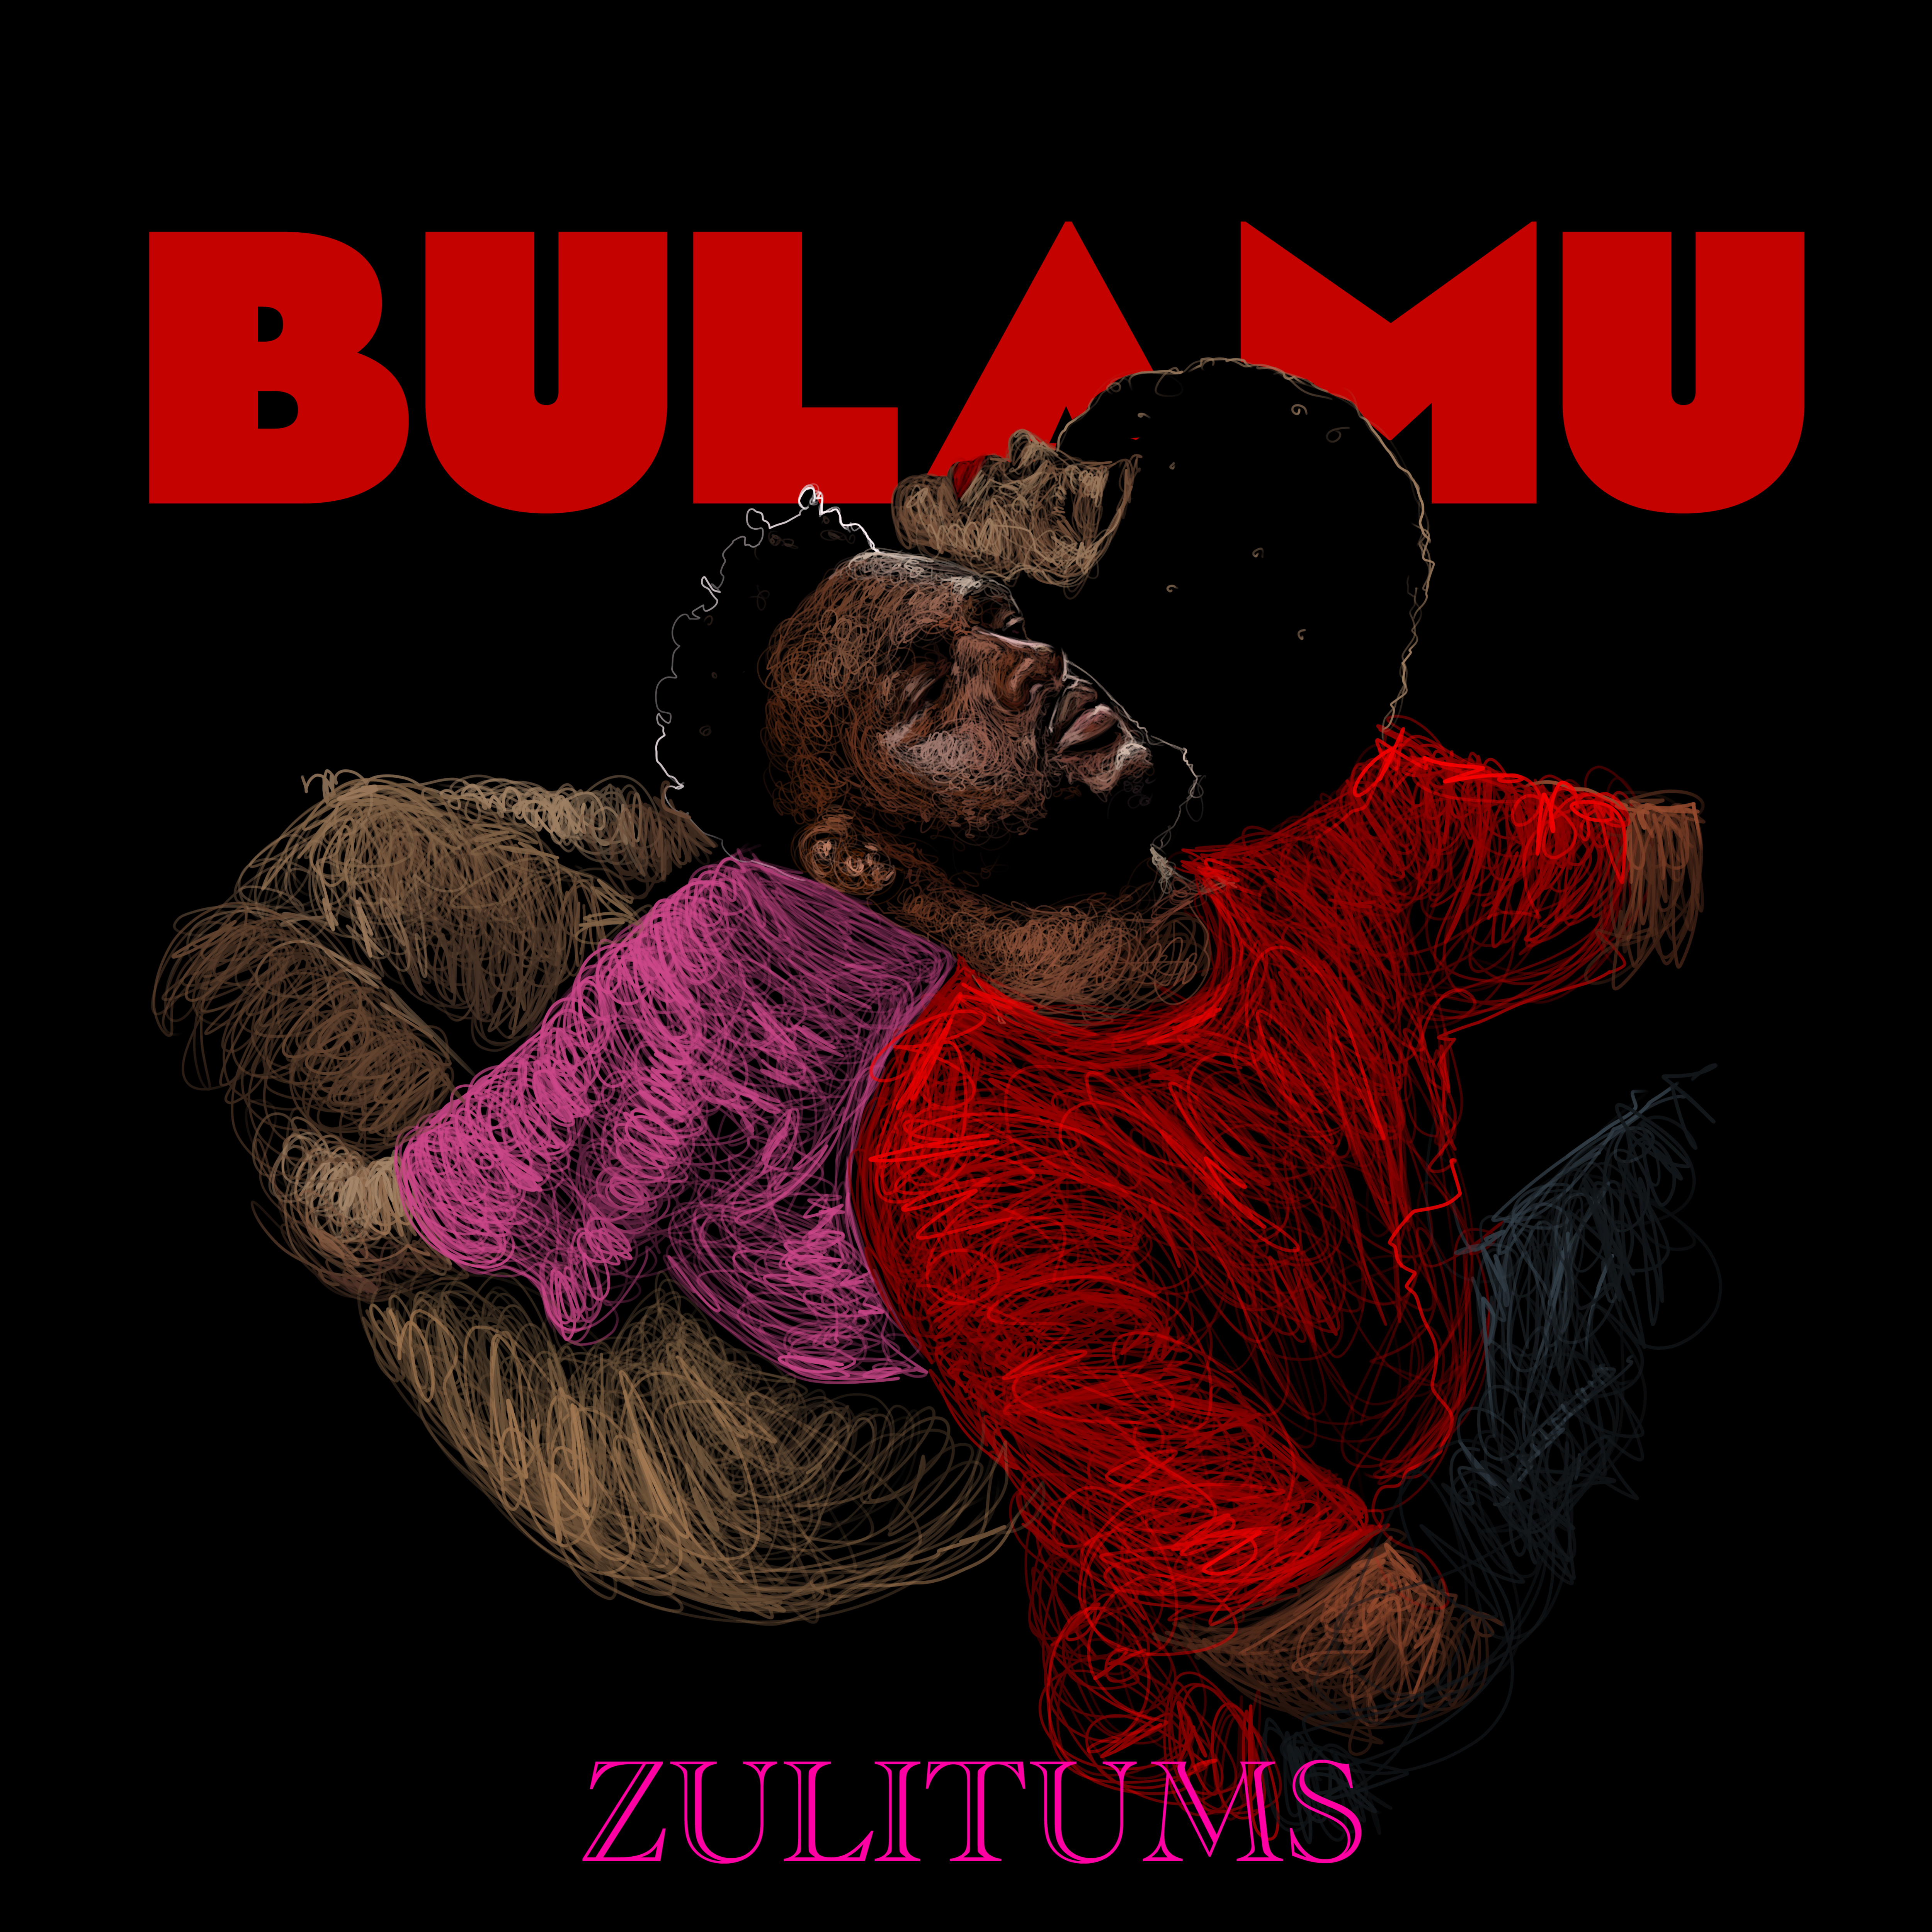 Zulitums - Bulamu